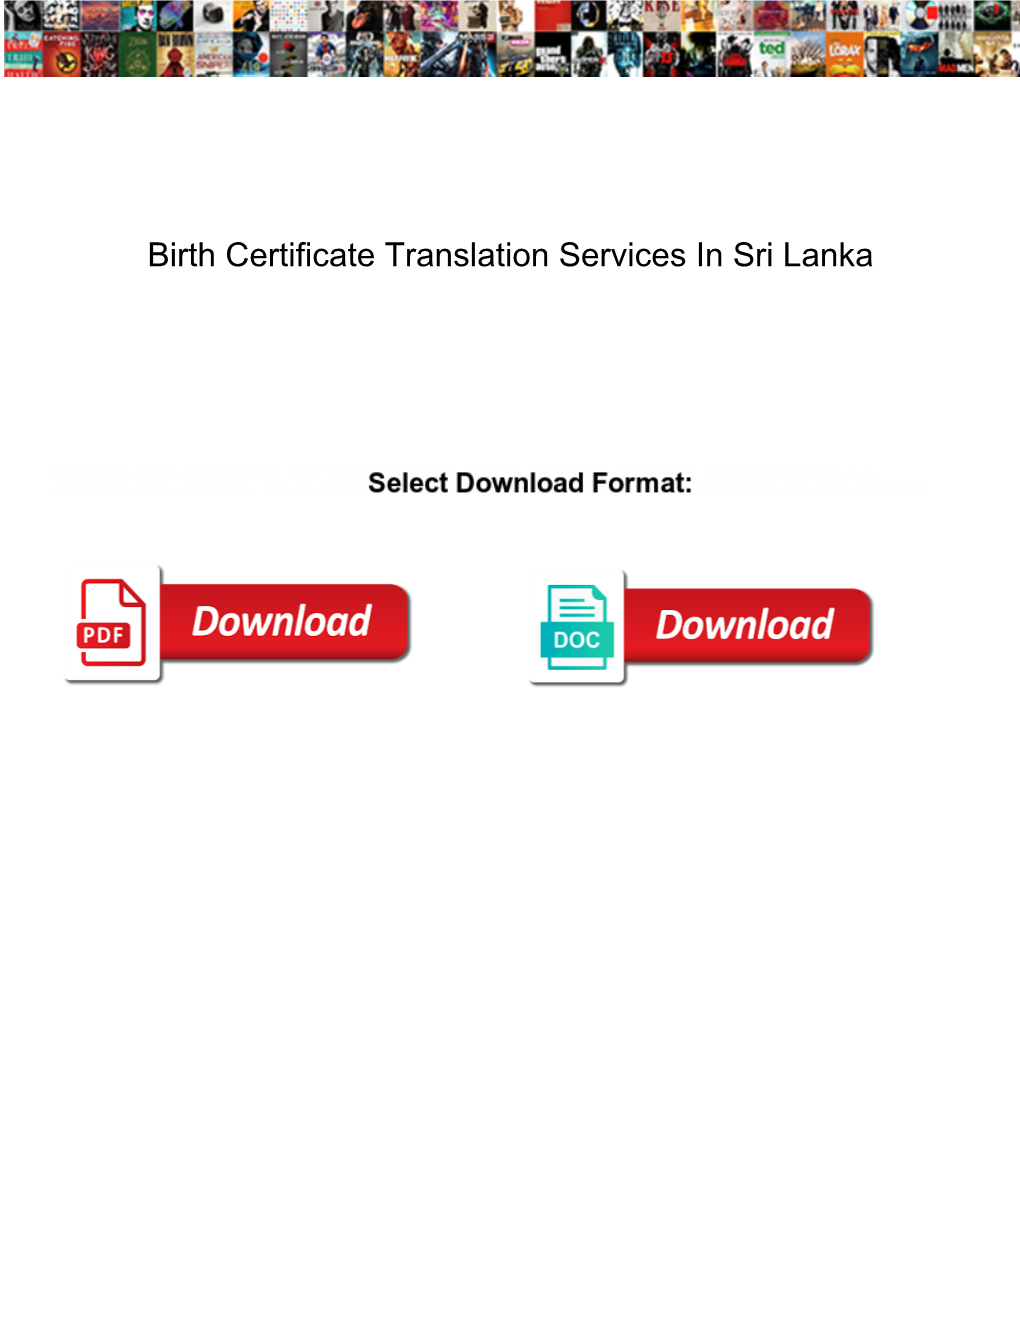 Birth Certificate Translation Services in Sri Lanka